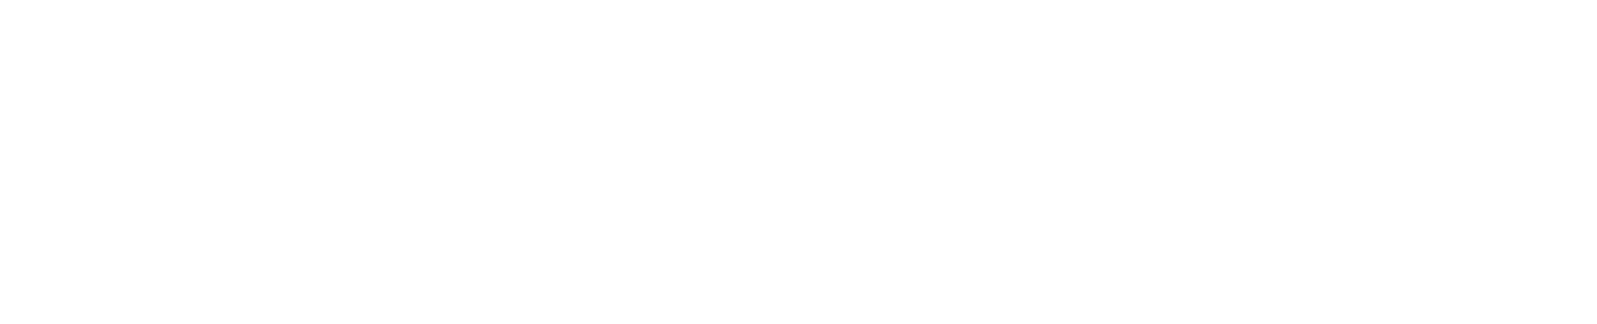 Winpak logo large for dark backgrounds (transparent PNG)